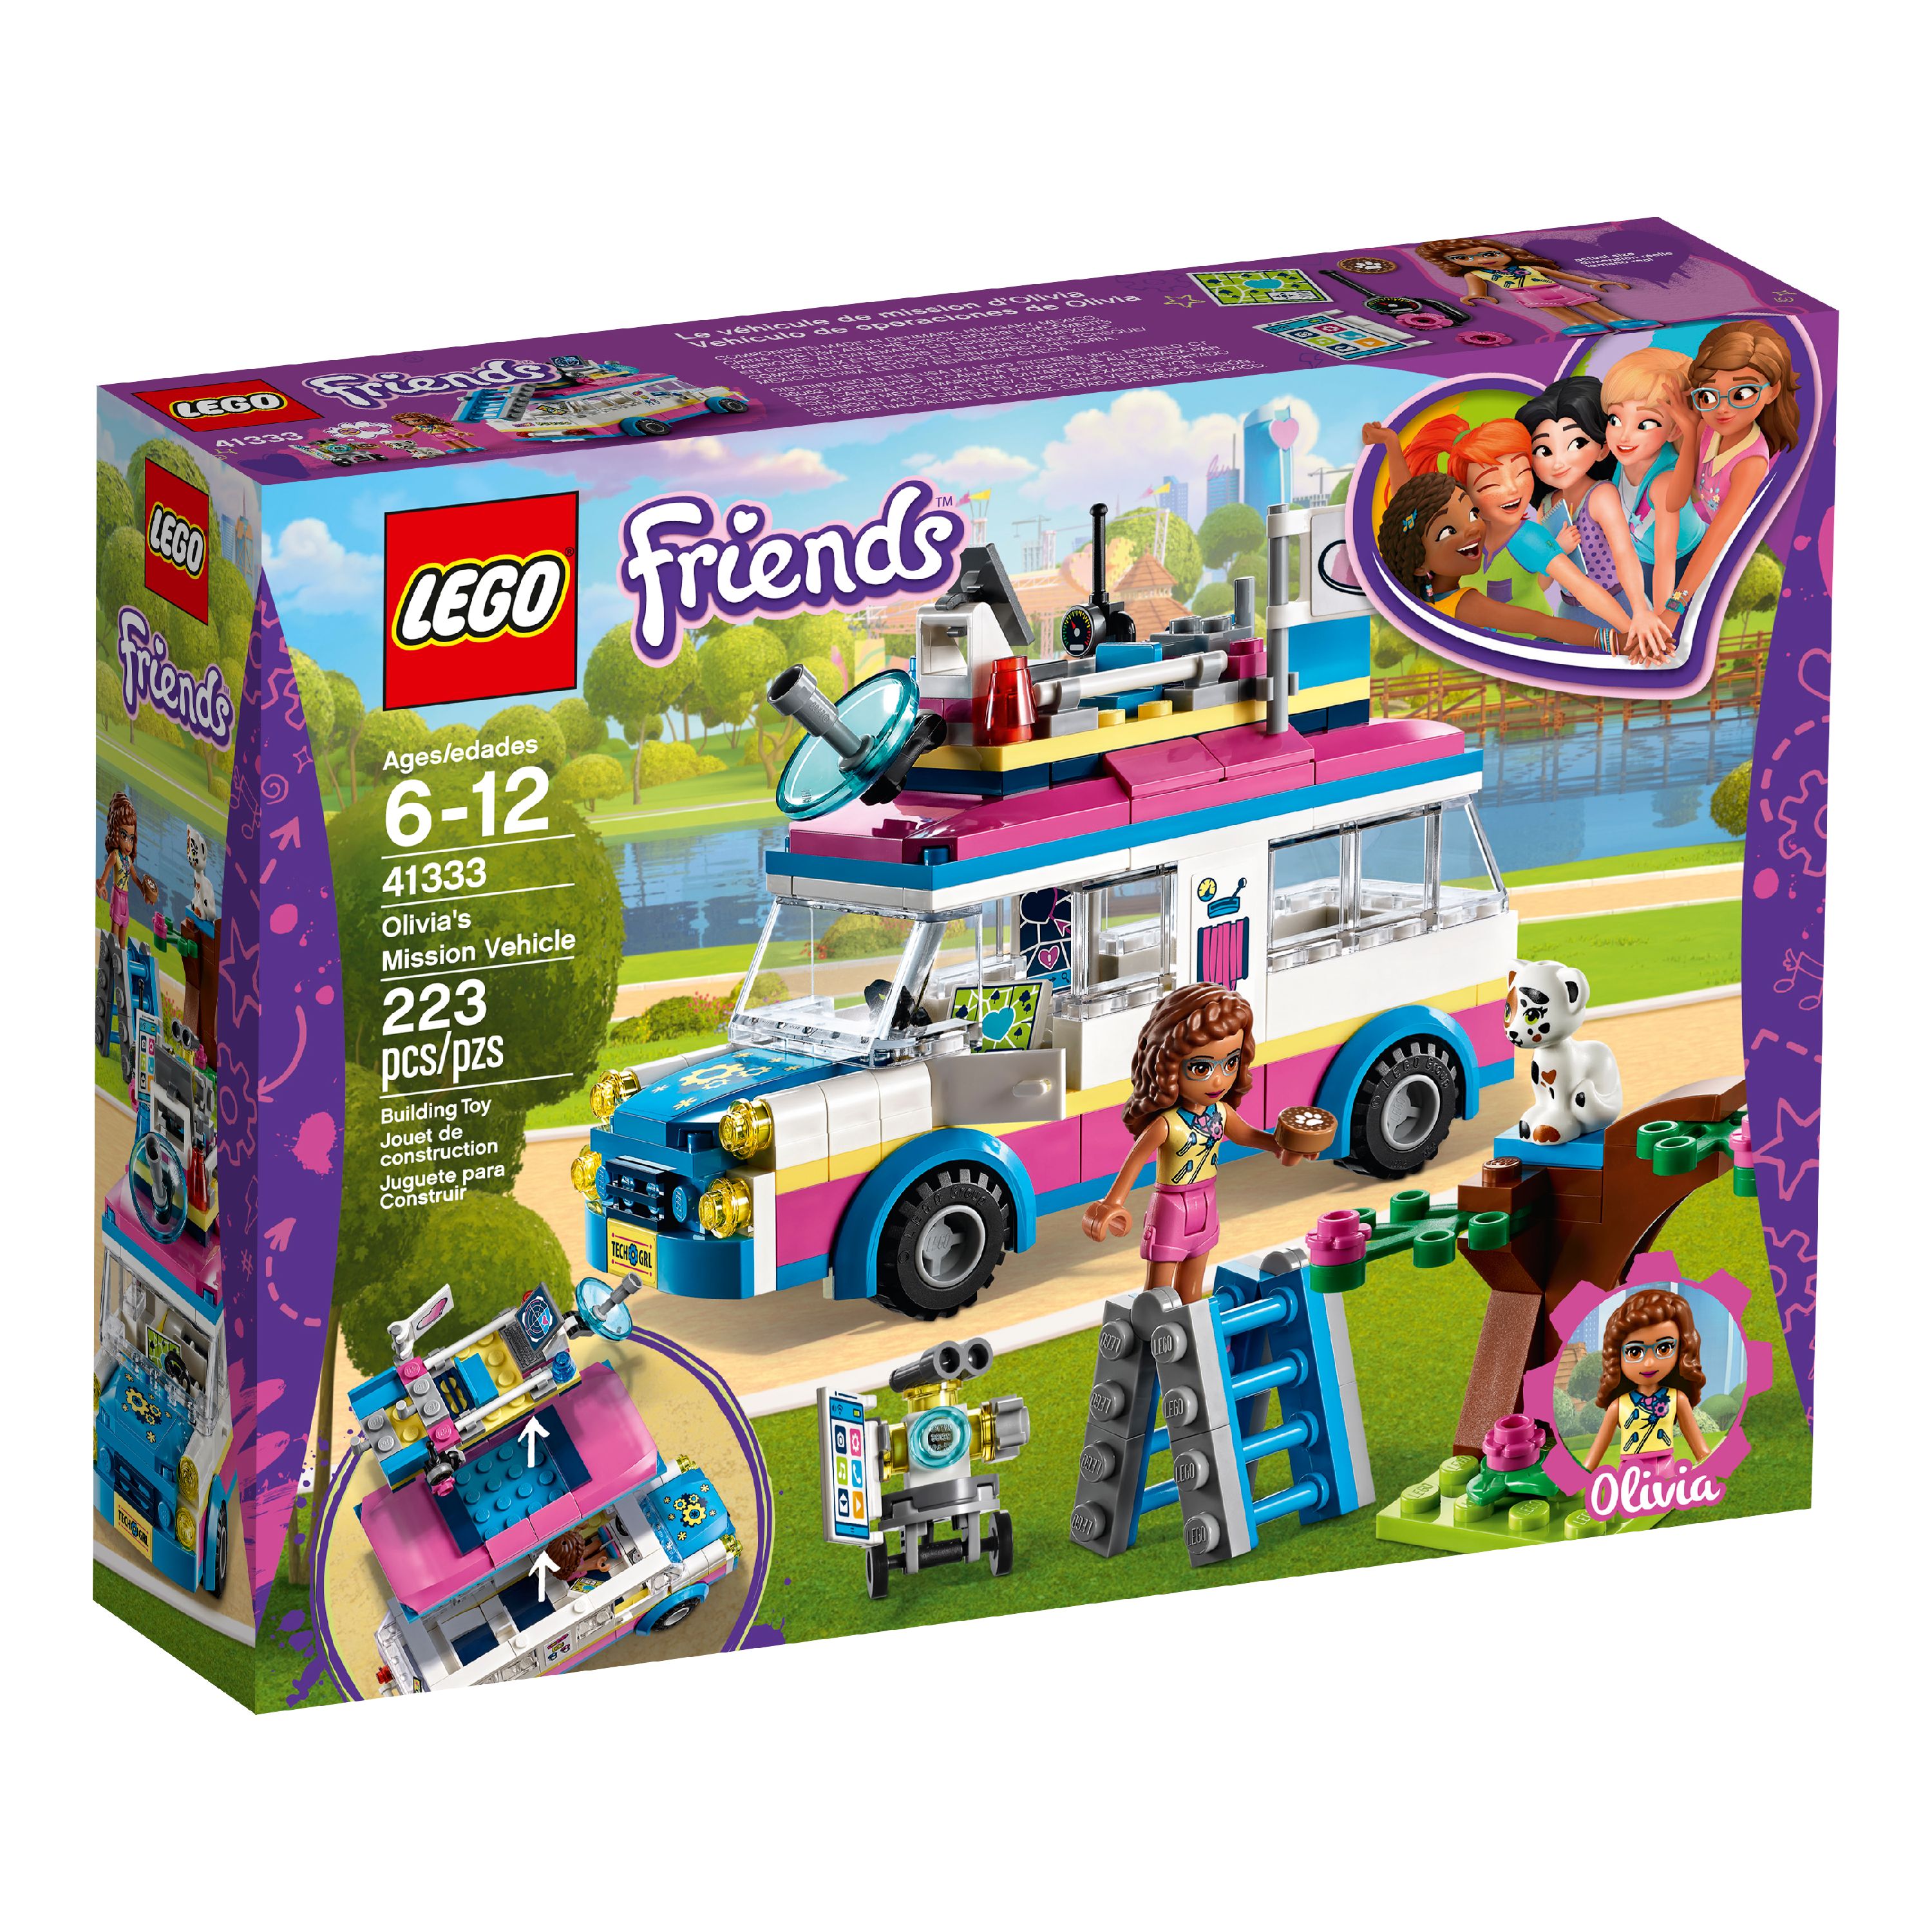 LEGO Friends Olivia's Mission Vehicle 41333 - image 4 of 7